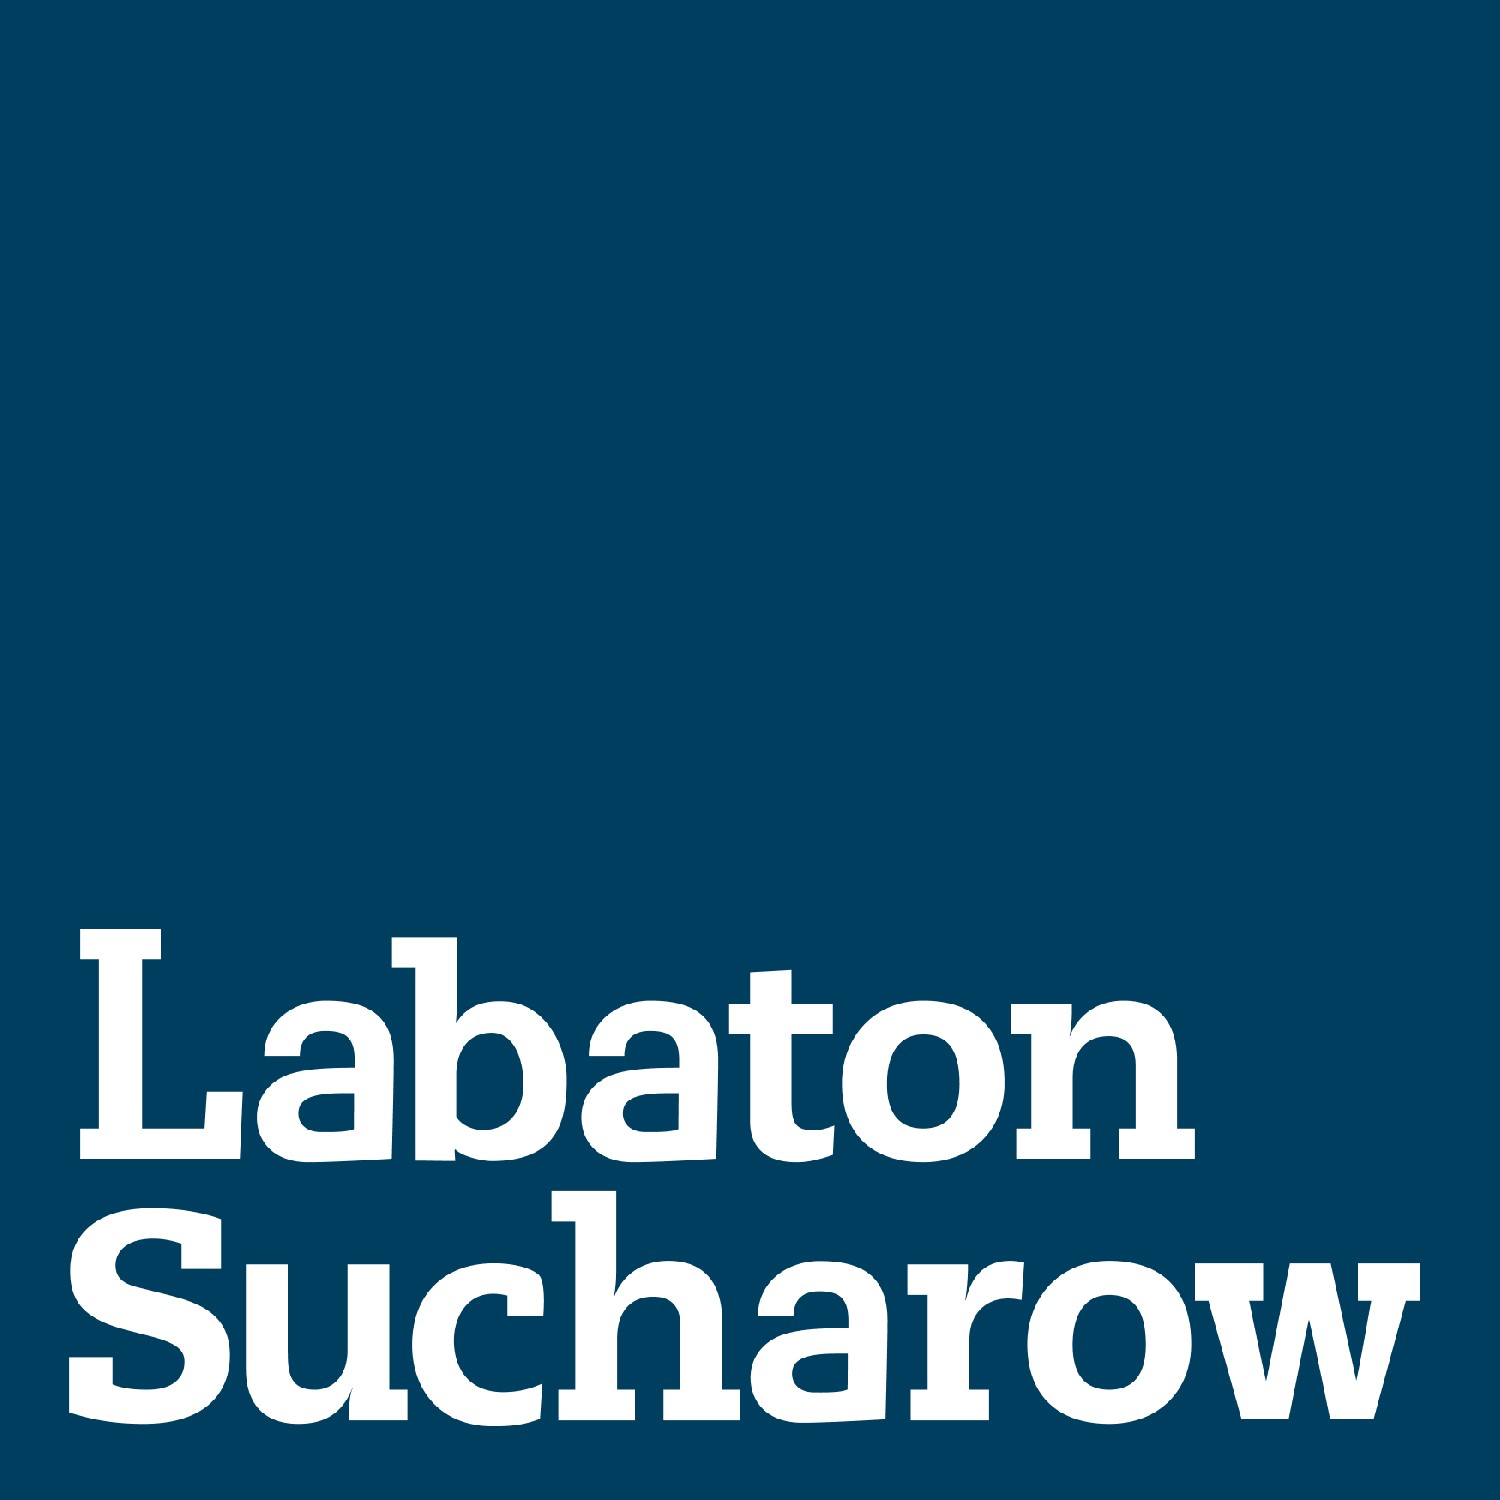 Labaton Sucharow LLP, Wednesday, April 22, 2020, Press release picture